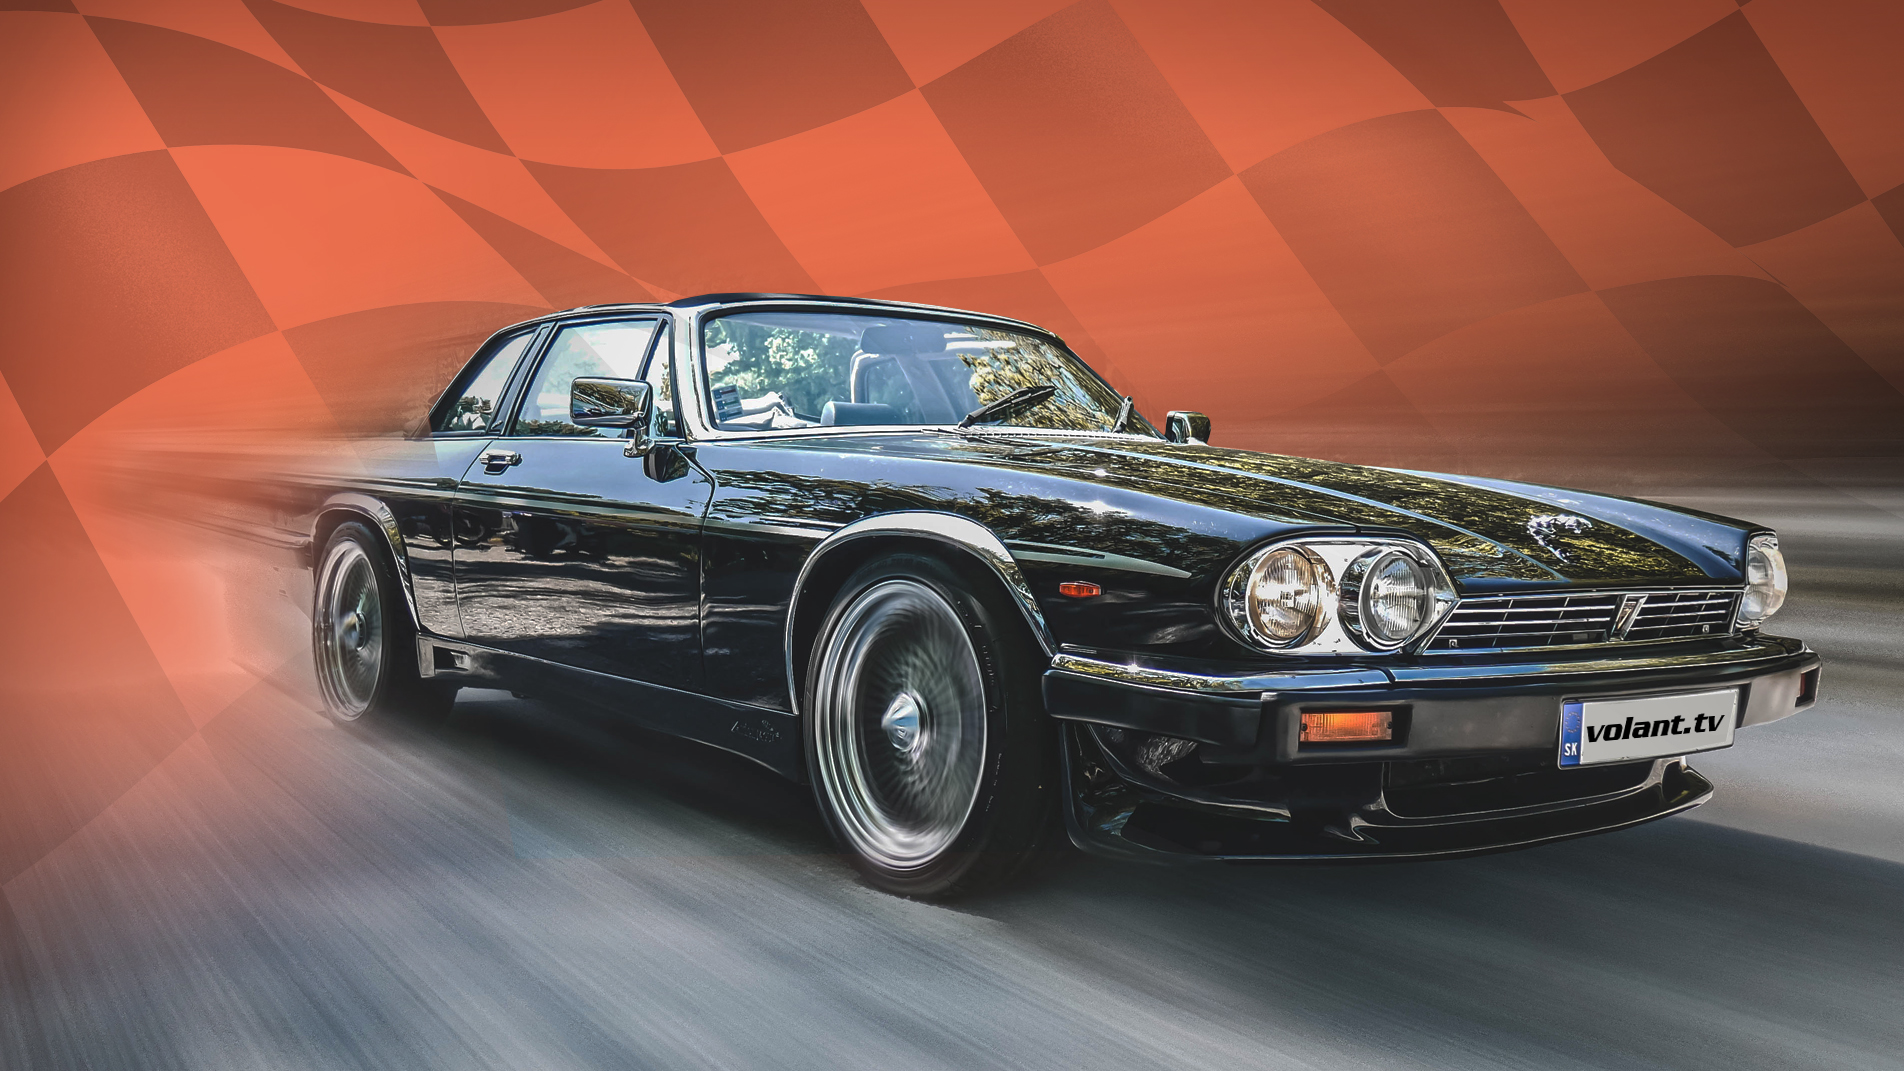 Jaguar XJ-SC V12